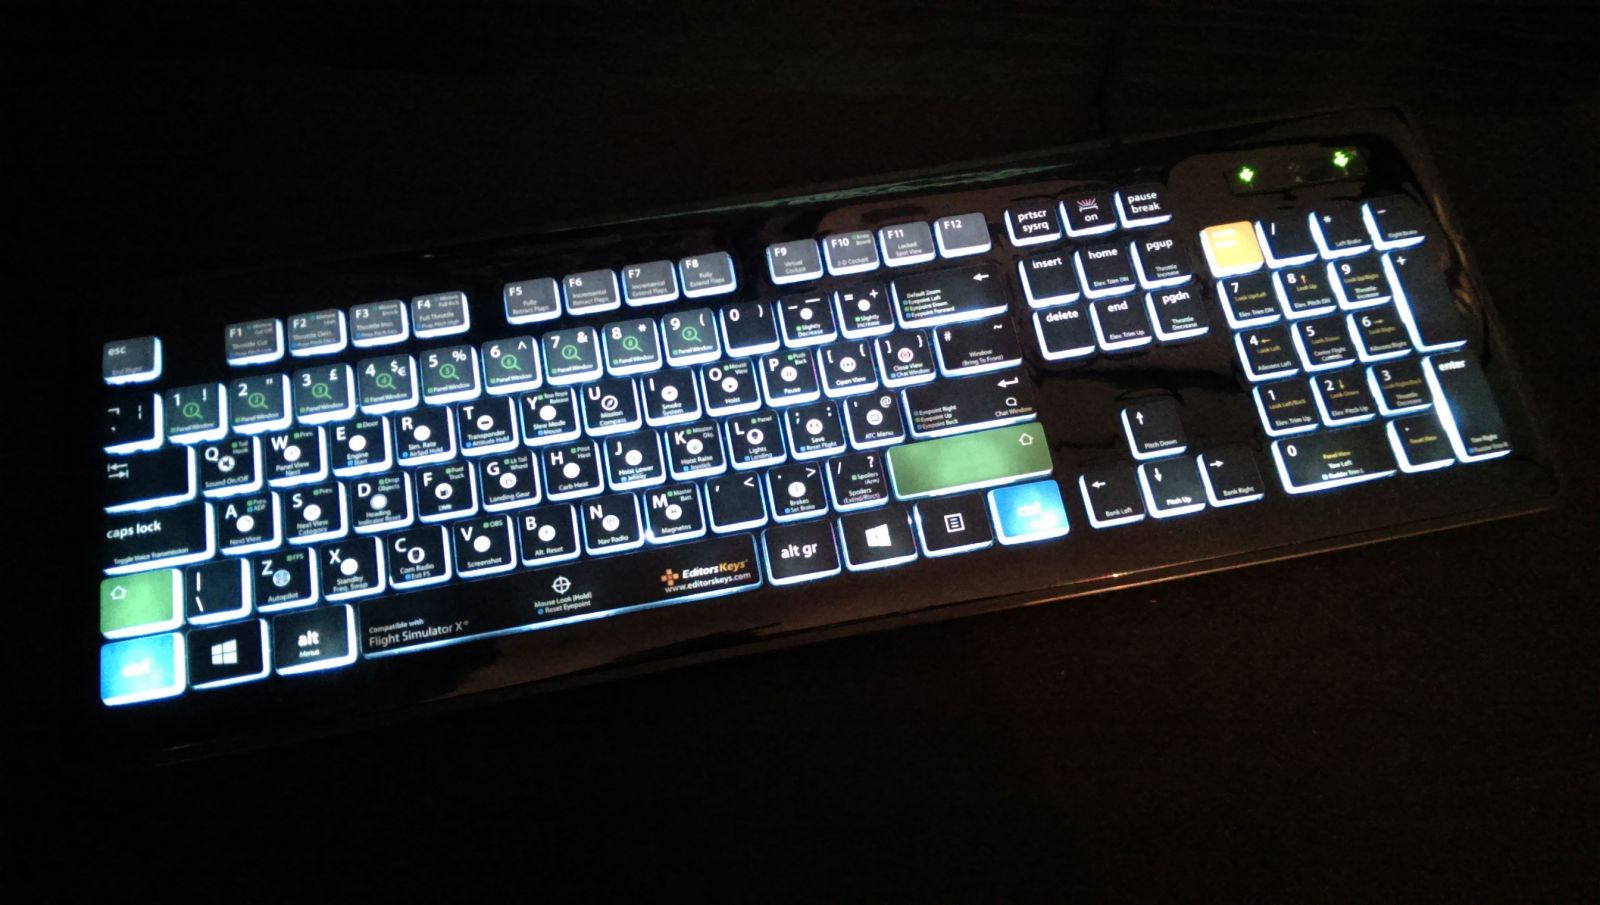 The dedicated backlit keyboard for Microsoft Flight Simulator X